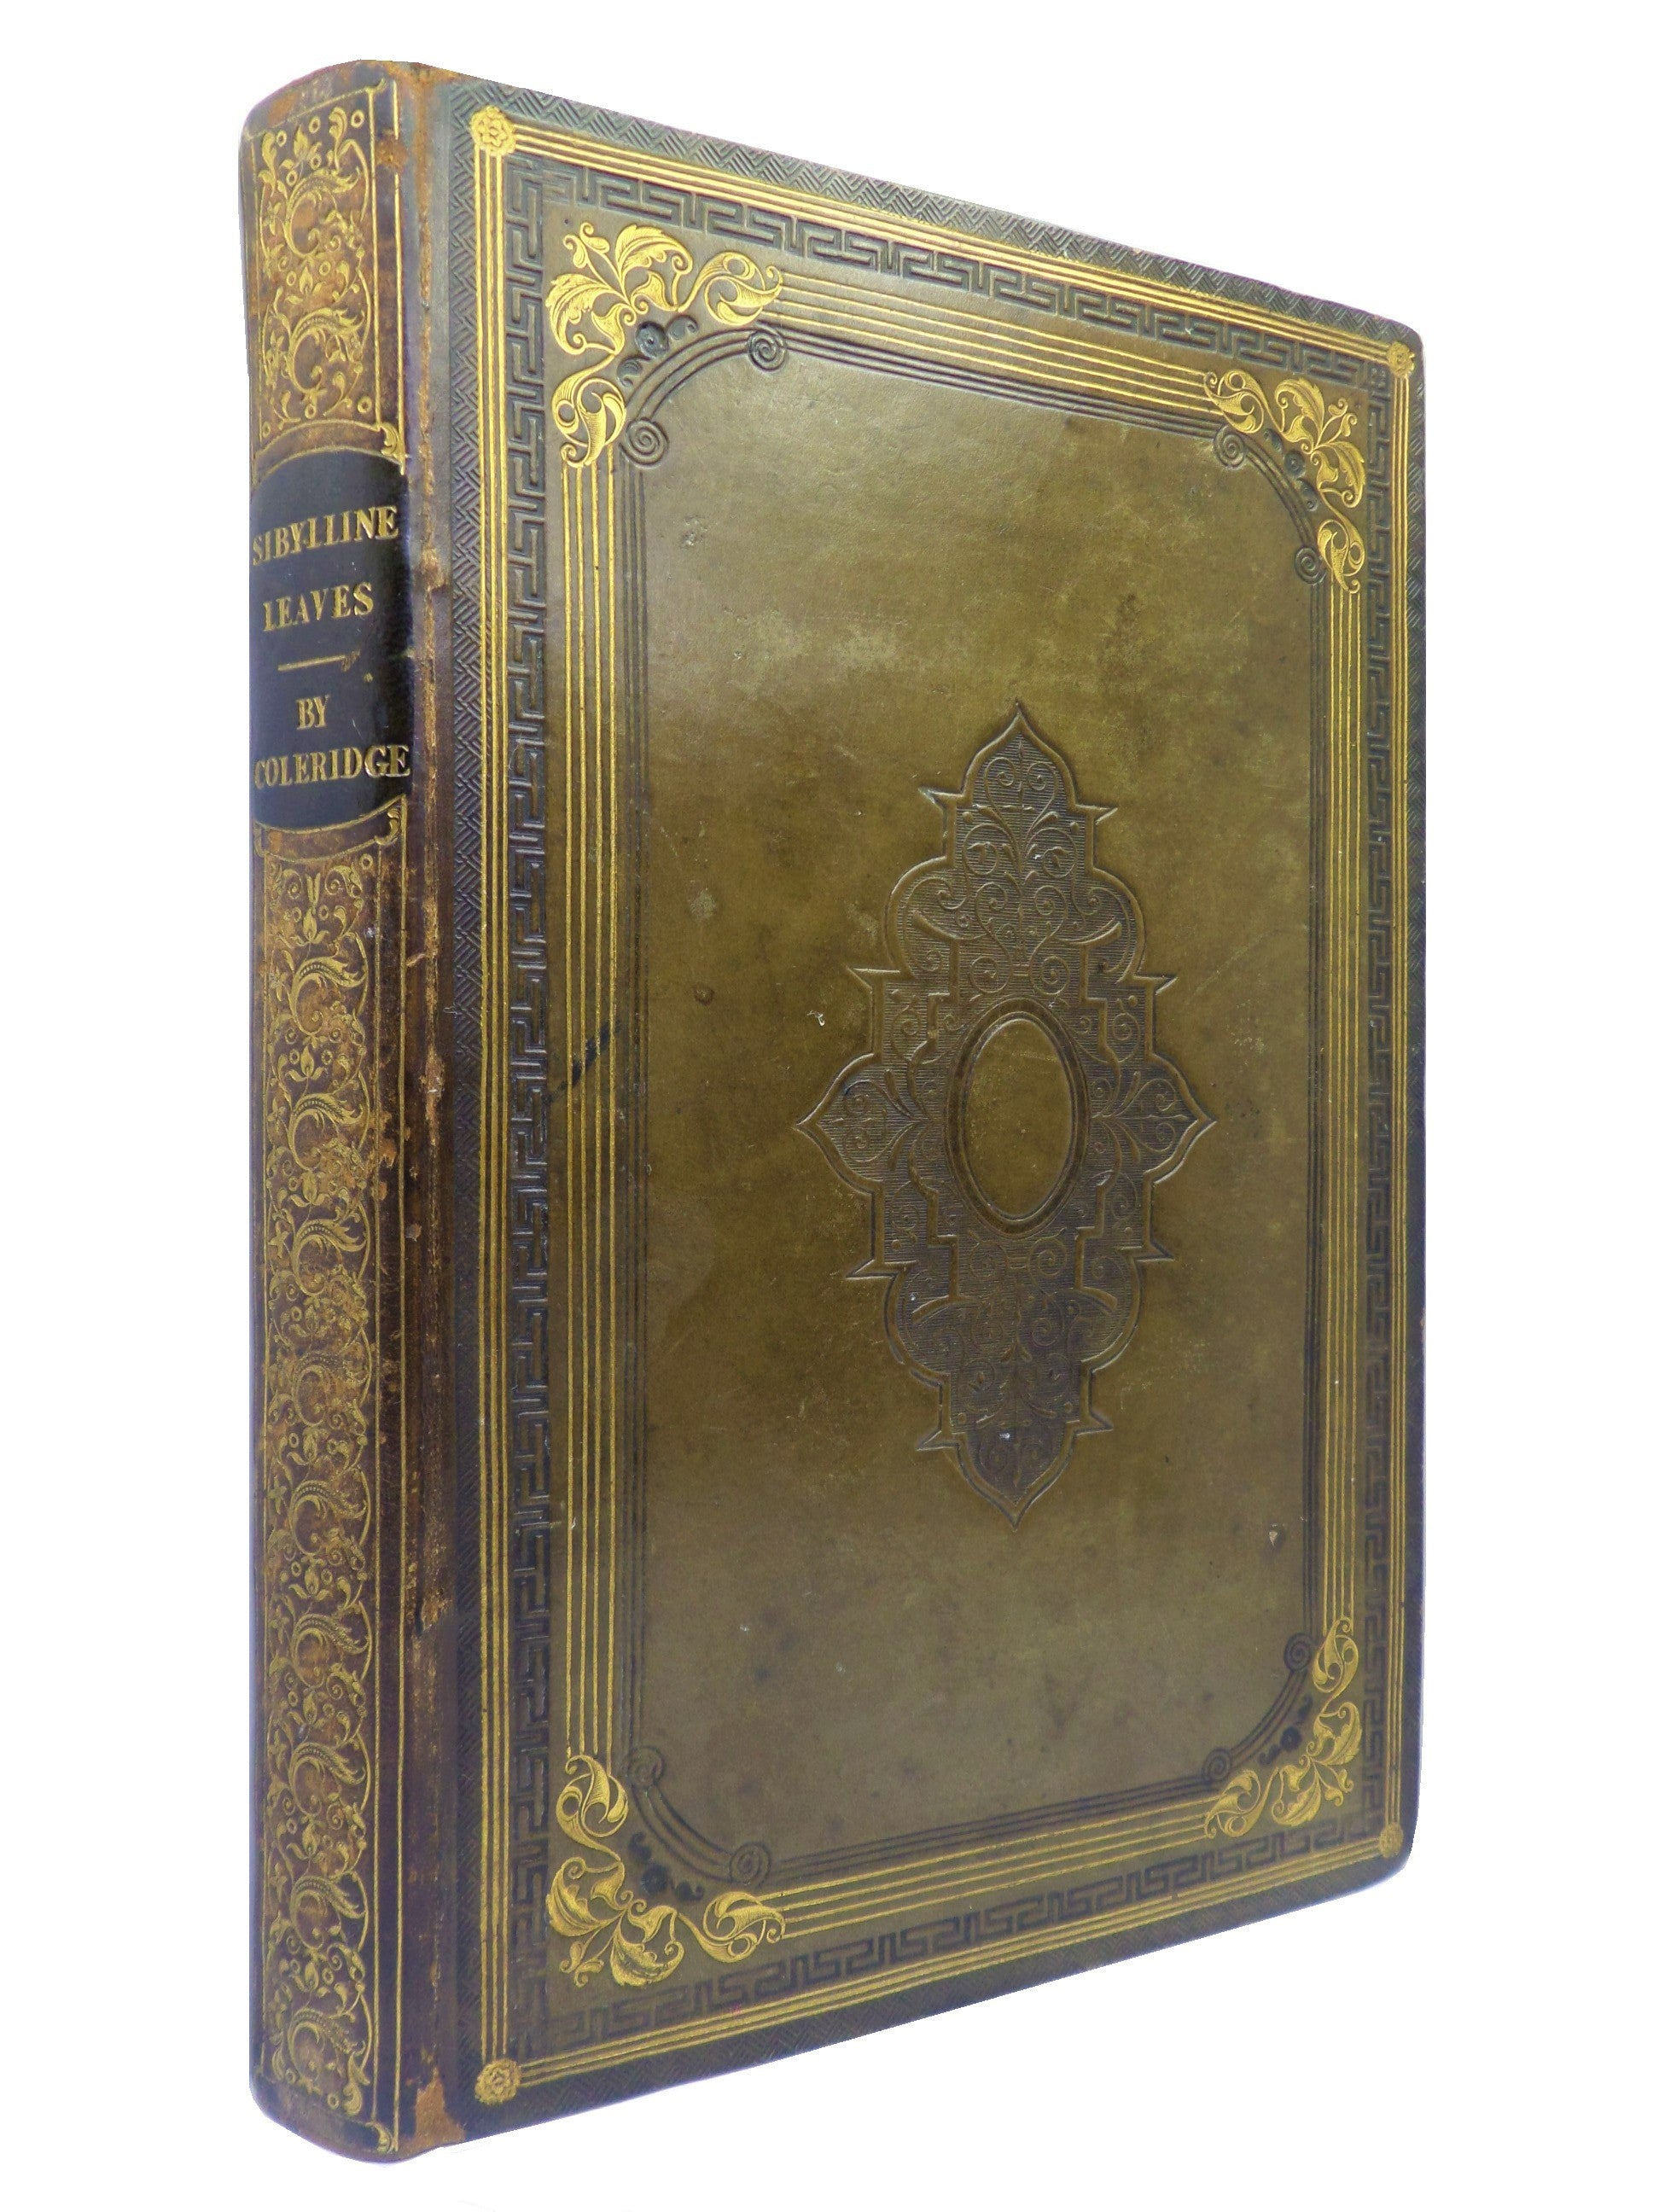 SIBYLLINE LEAVES 1817 & CHRISTABEL 1816 SAMUEL TAYLOR COLERIDGE FIRST EDITIONS